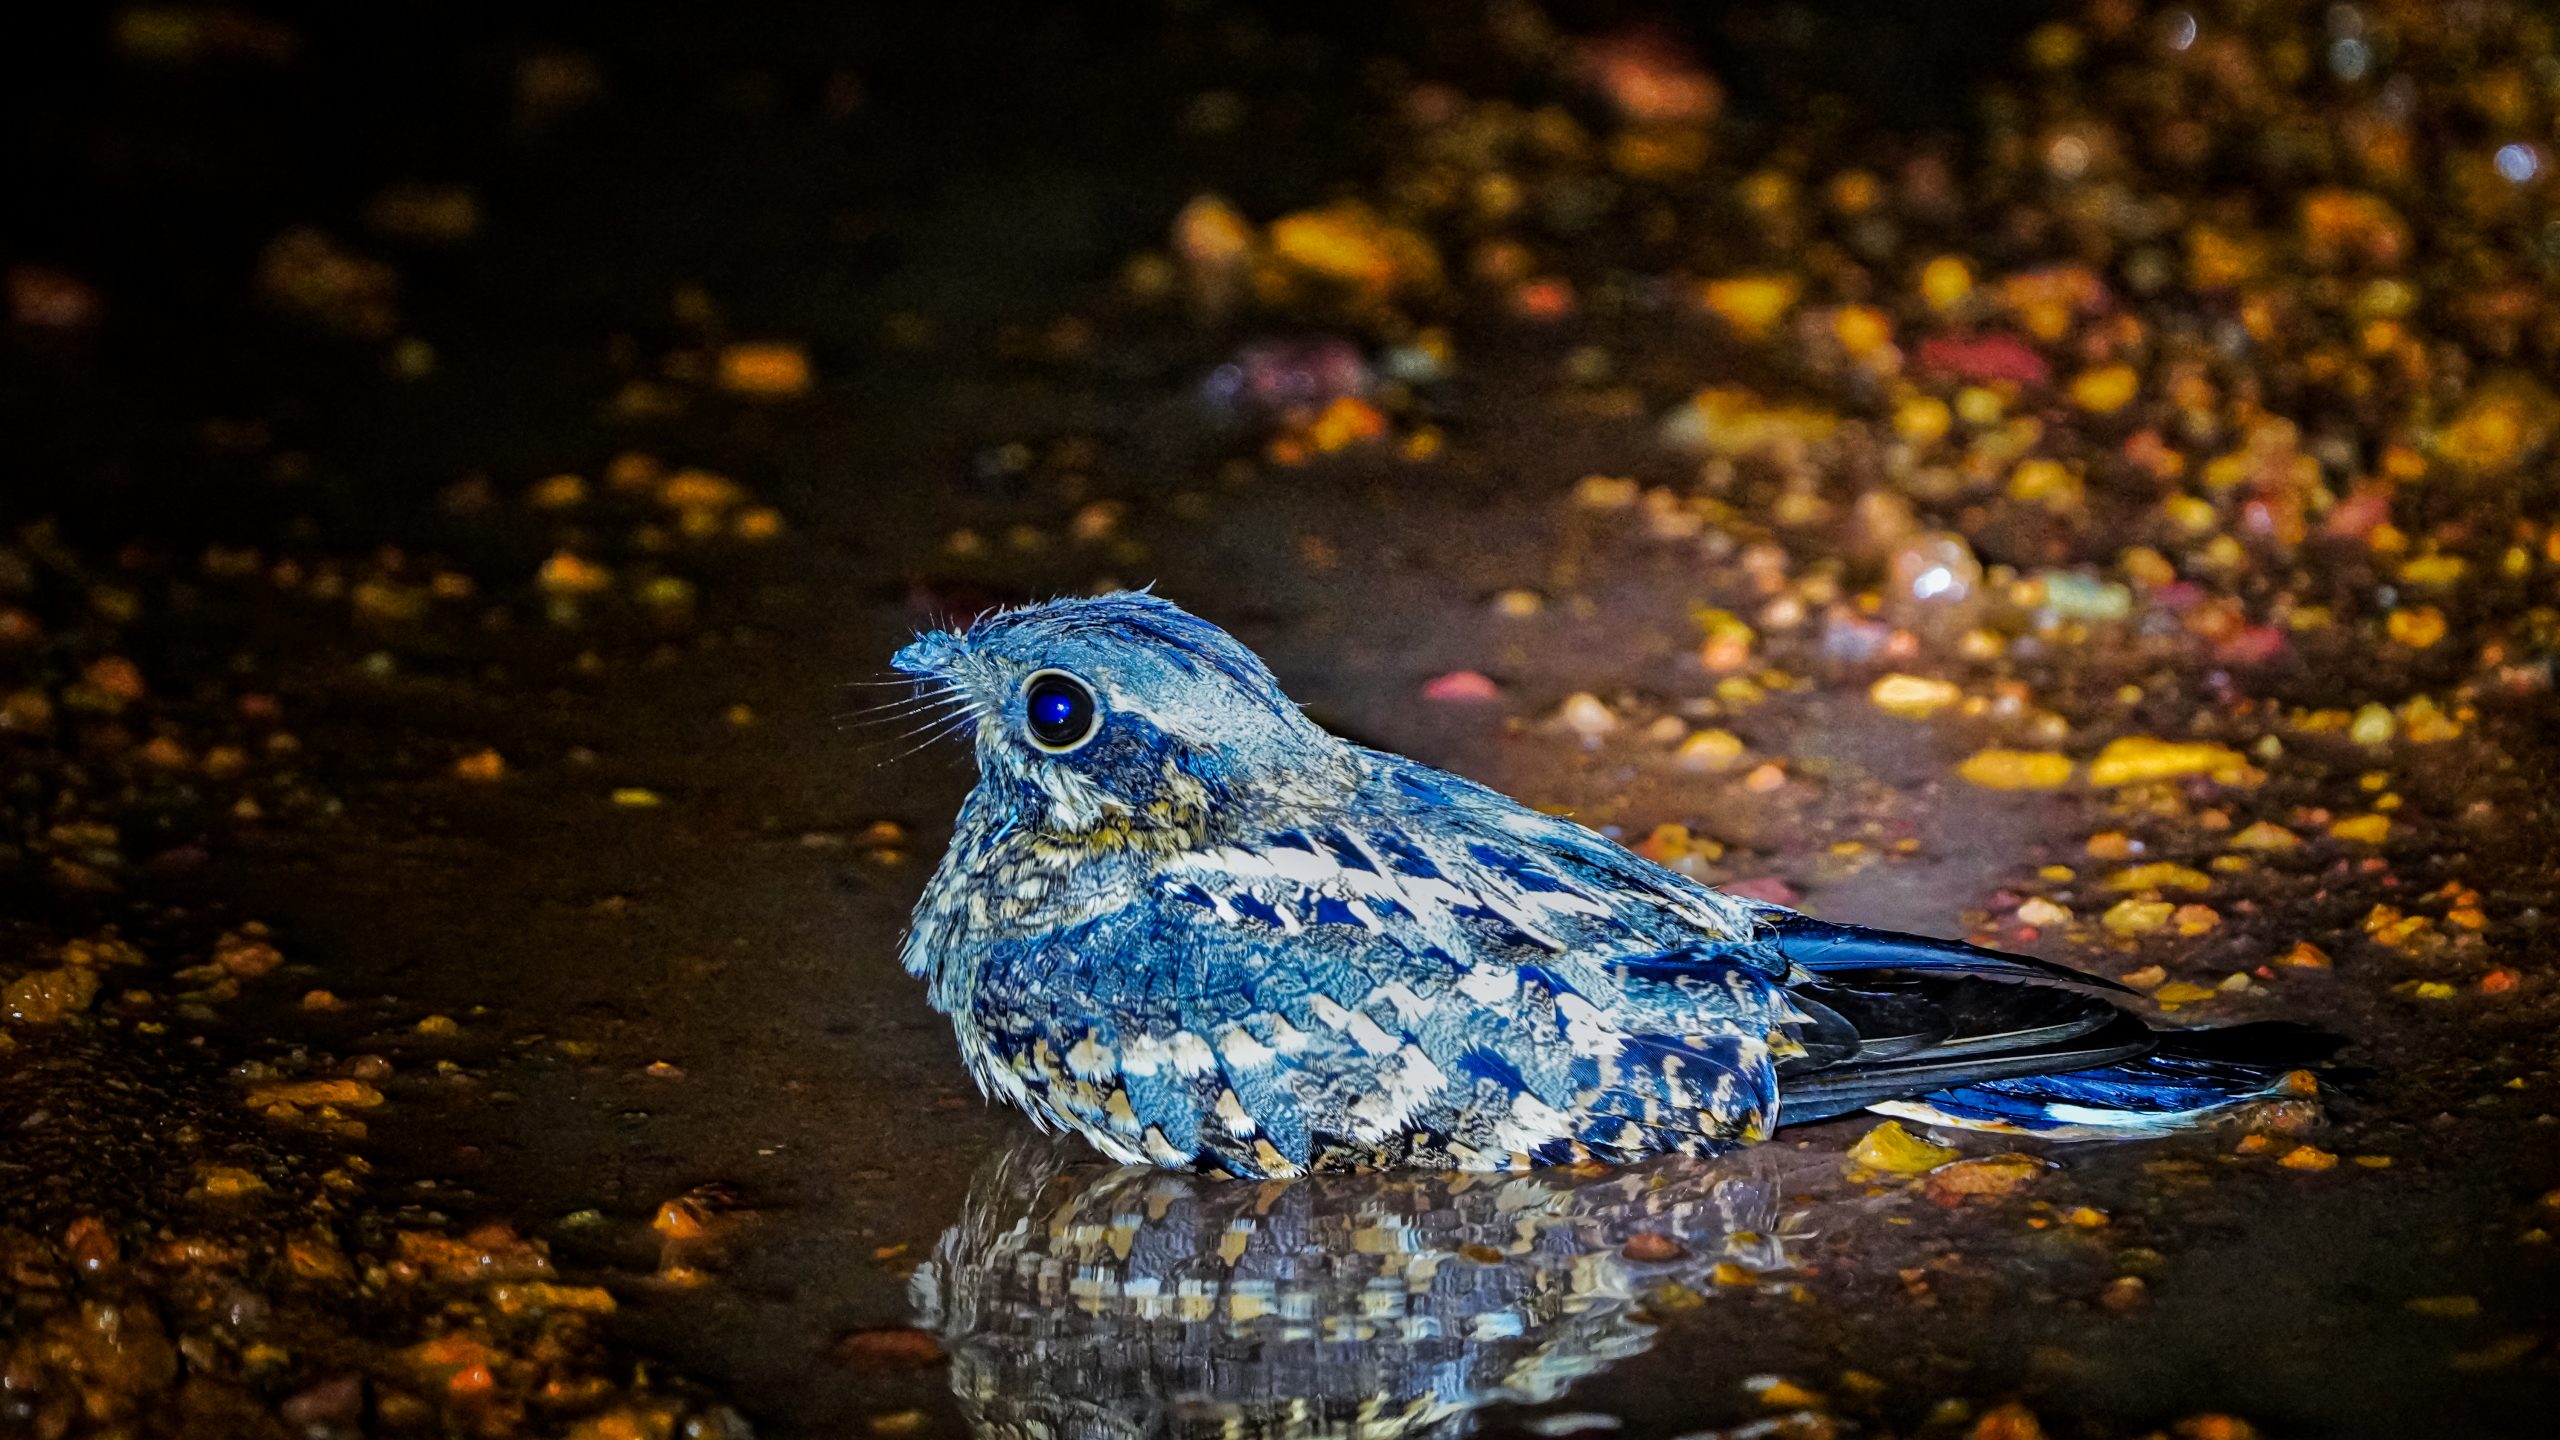 A nightjar bird in water